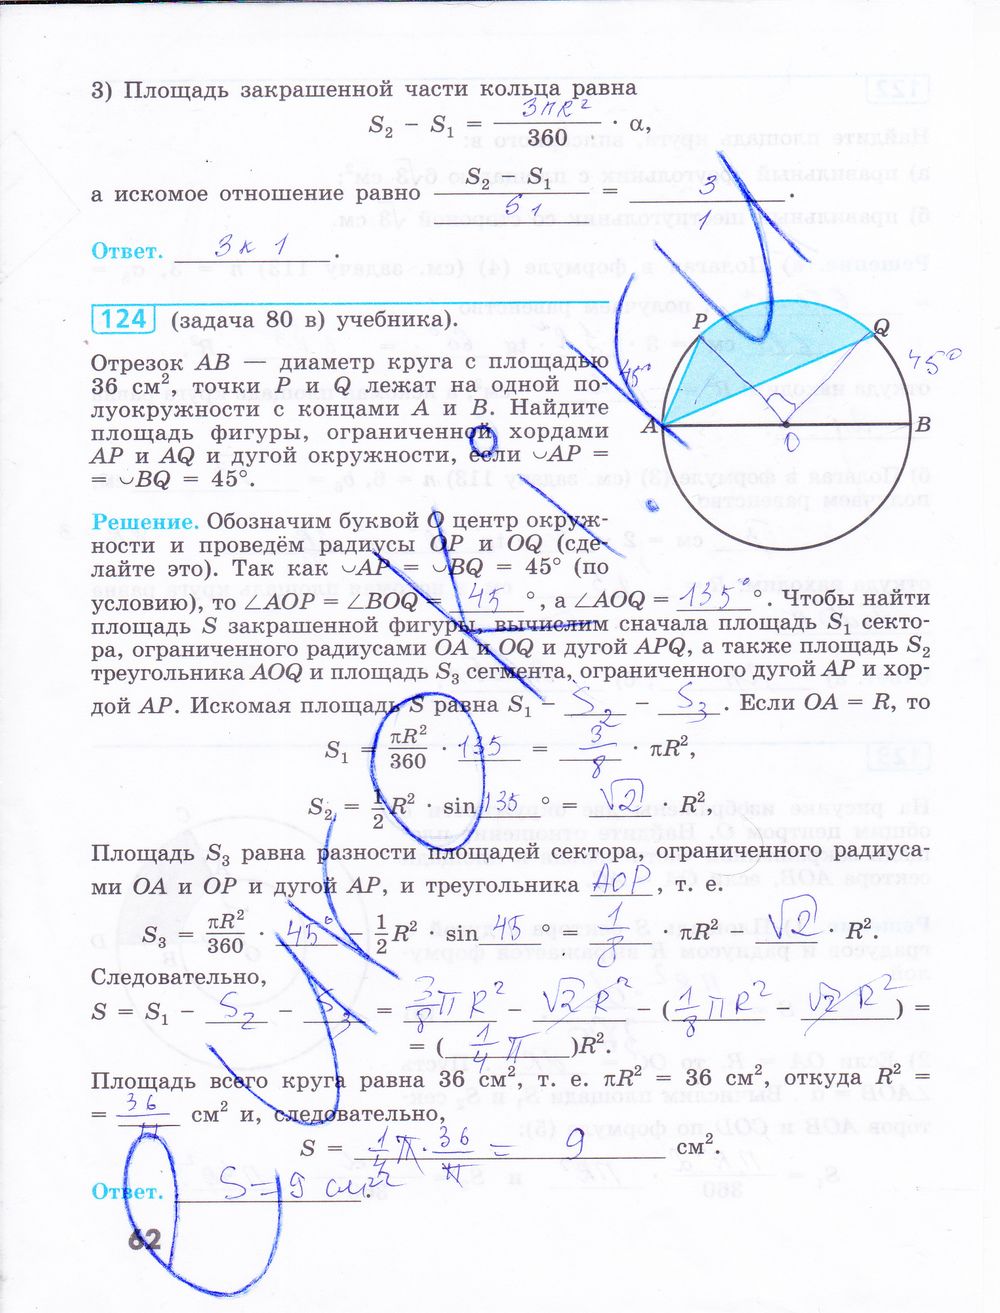 ГДЗ Геометрия 9 класс - стр. 62